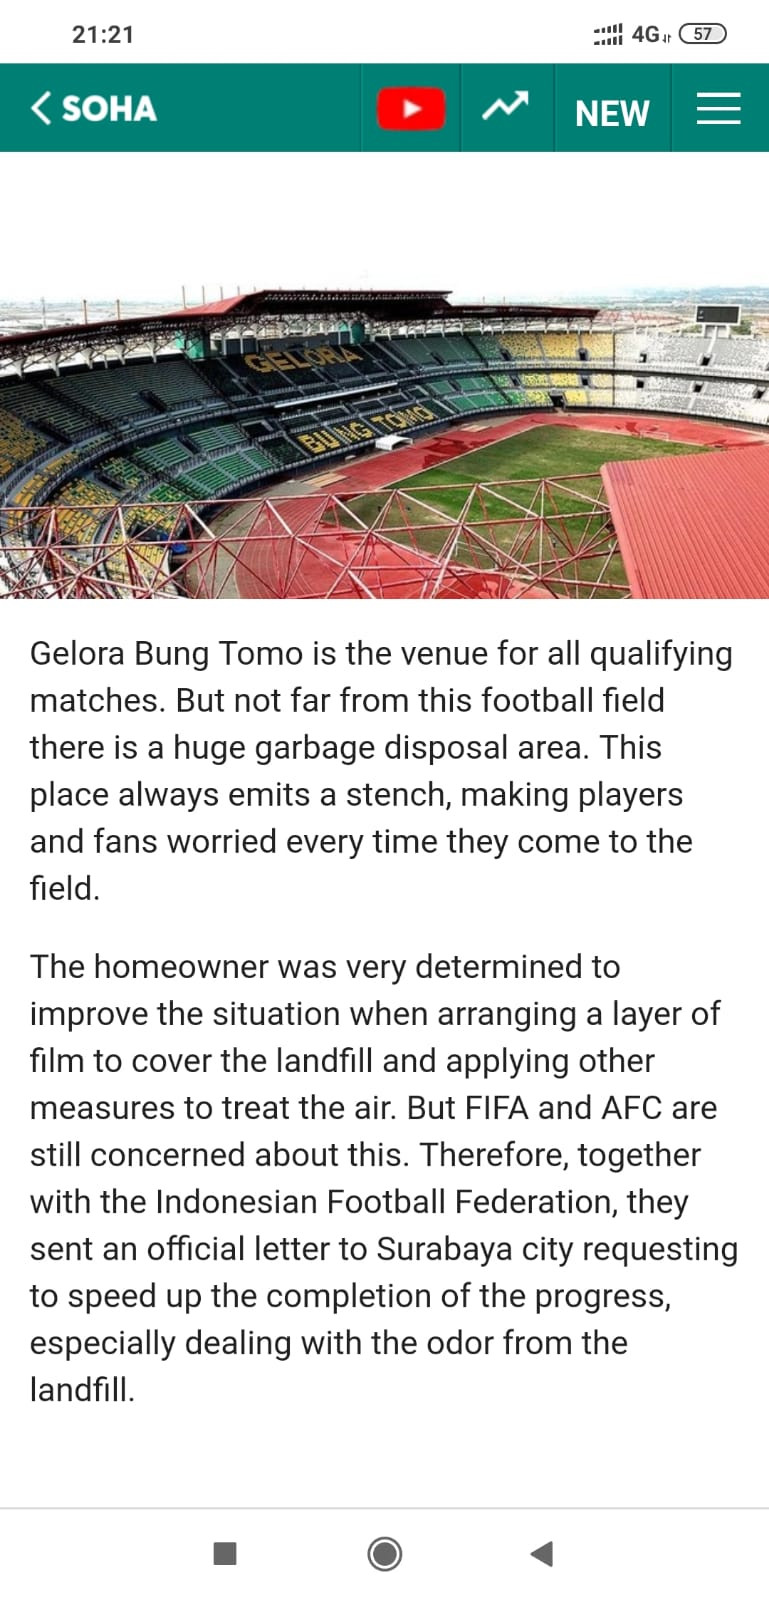 Stadion Gelora Bung Tomo di Surabaya Bau Sampah, Kata Media Vietnam